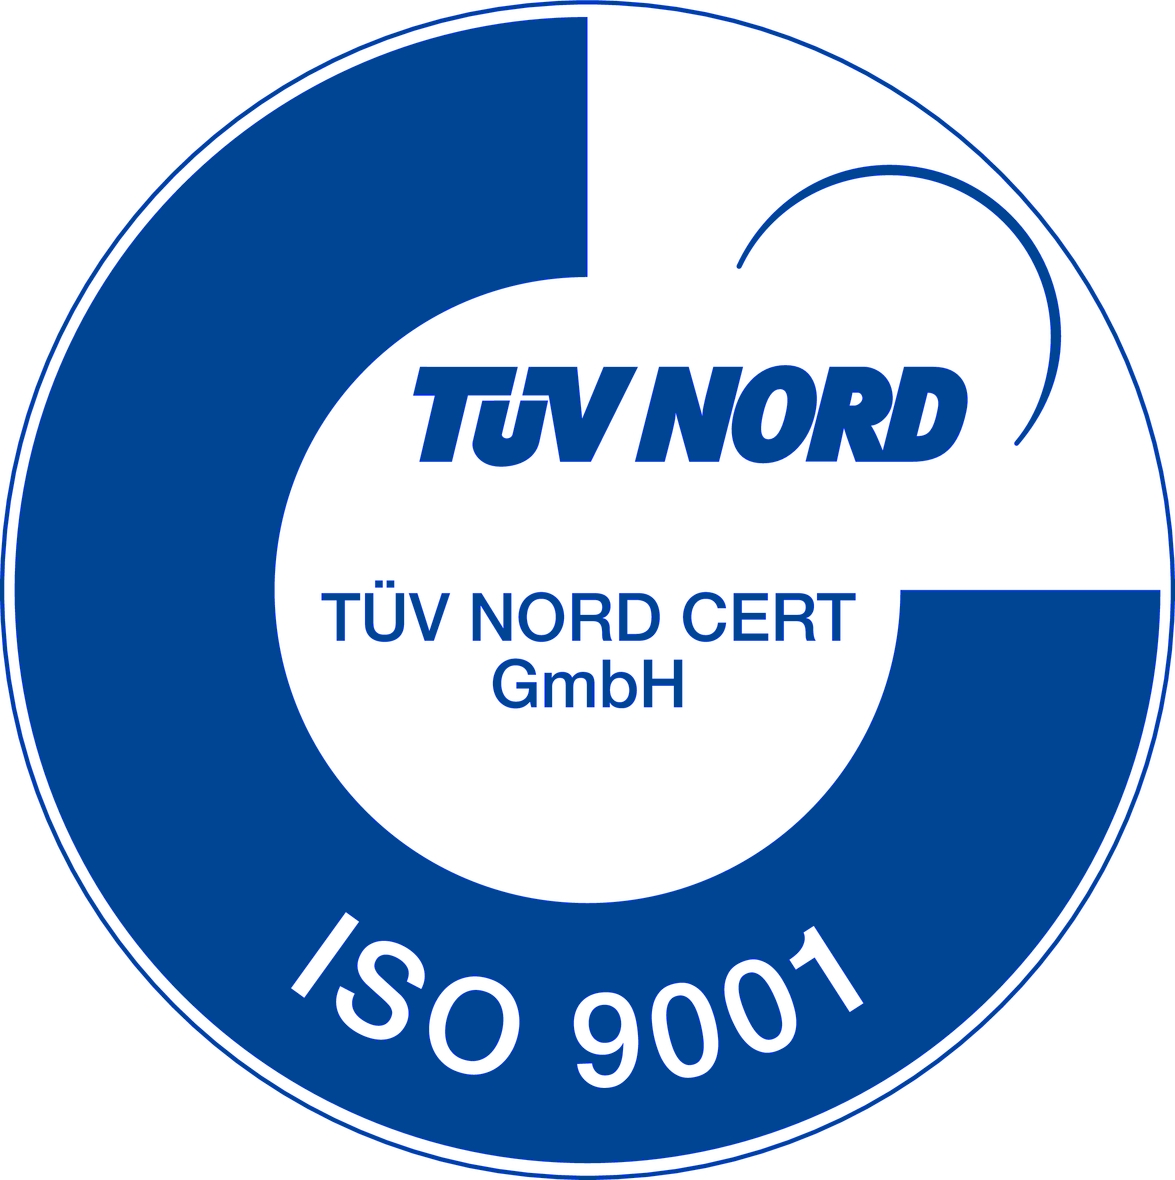 CERTIFICADO ISO 9001 POR TUV NORD